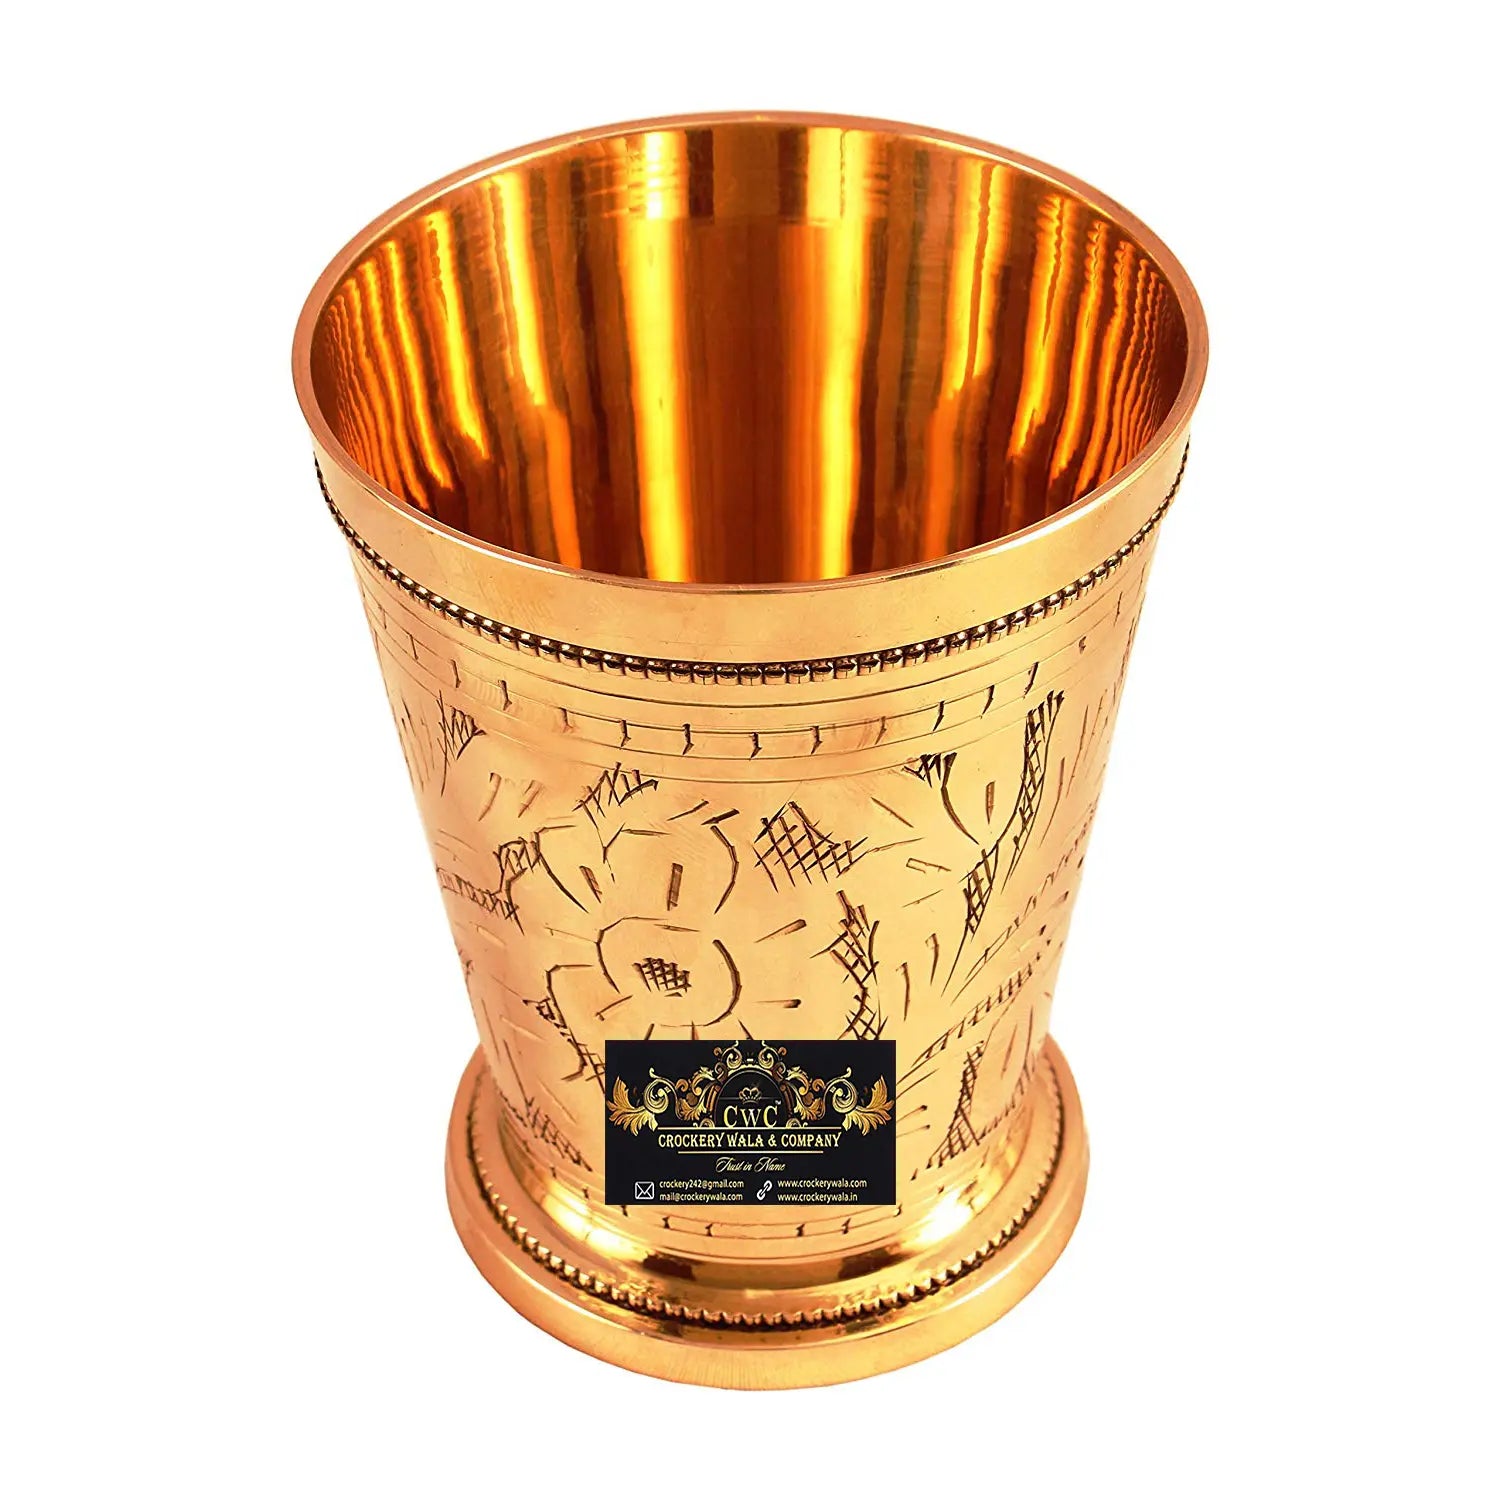 Crockery Wala And Company Handmade Brass Flower Design Julip Glass Tumbler Cup|Volume 400 ML|Serving Drinking Water Decorative Gift Item - CROCKERY WALA AND COMPANY 